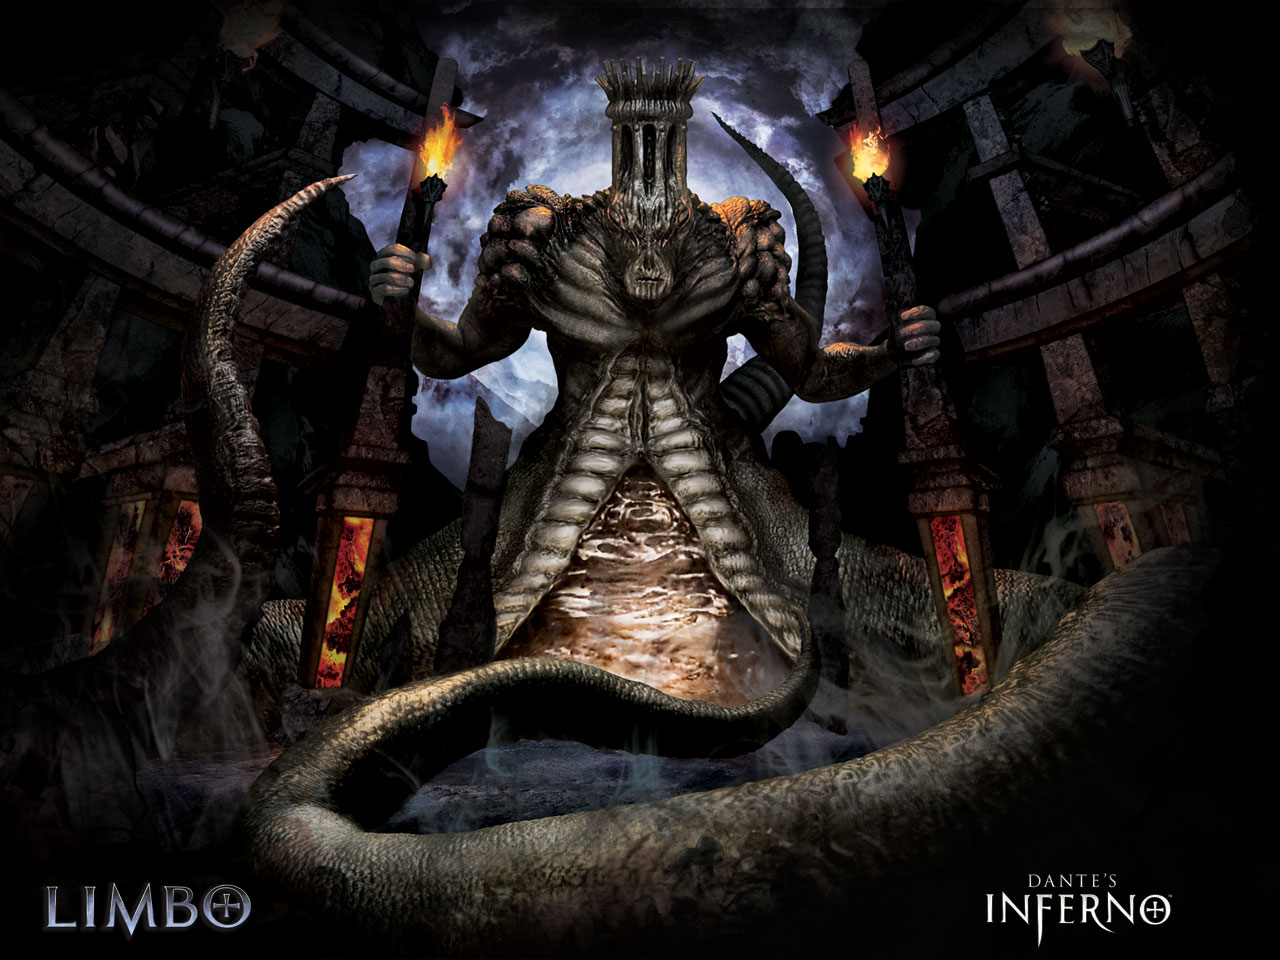 Buy Dante's Inferno™